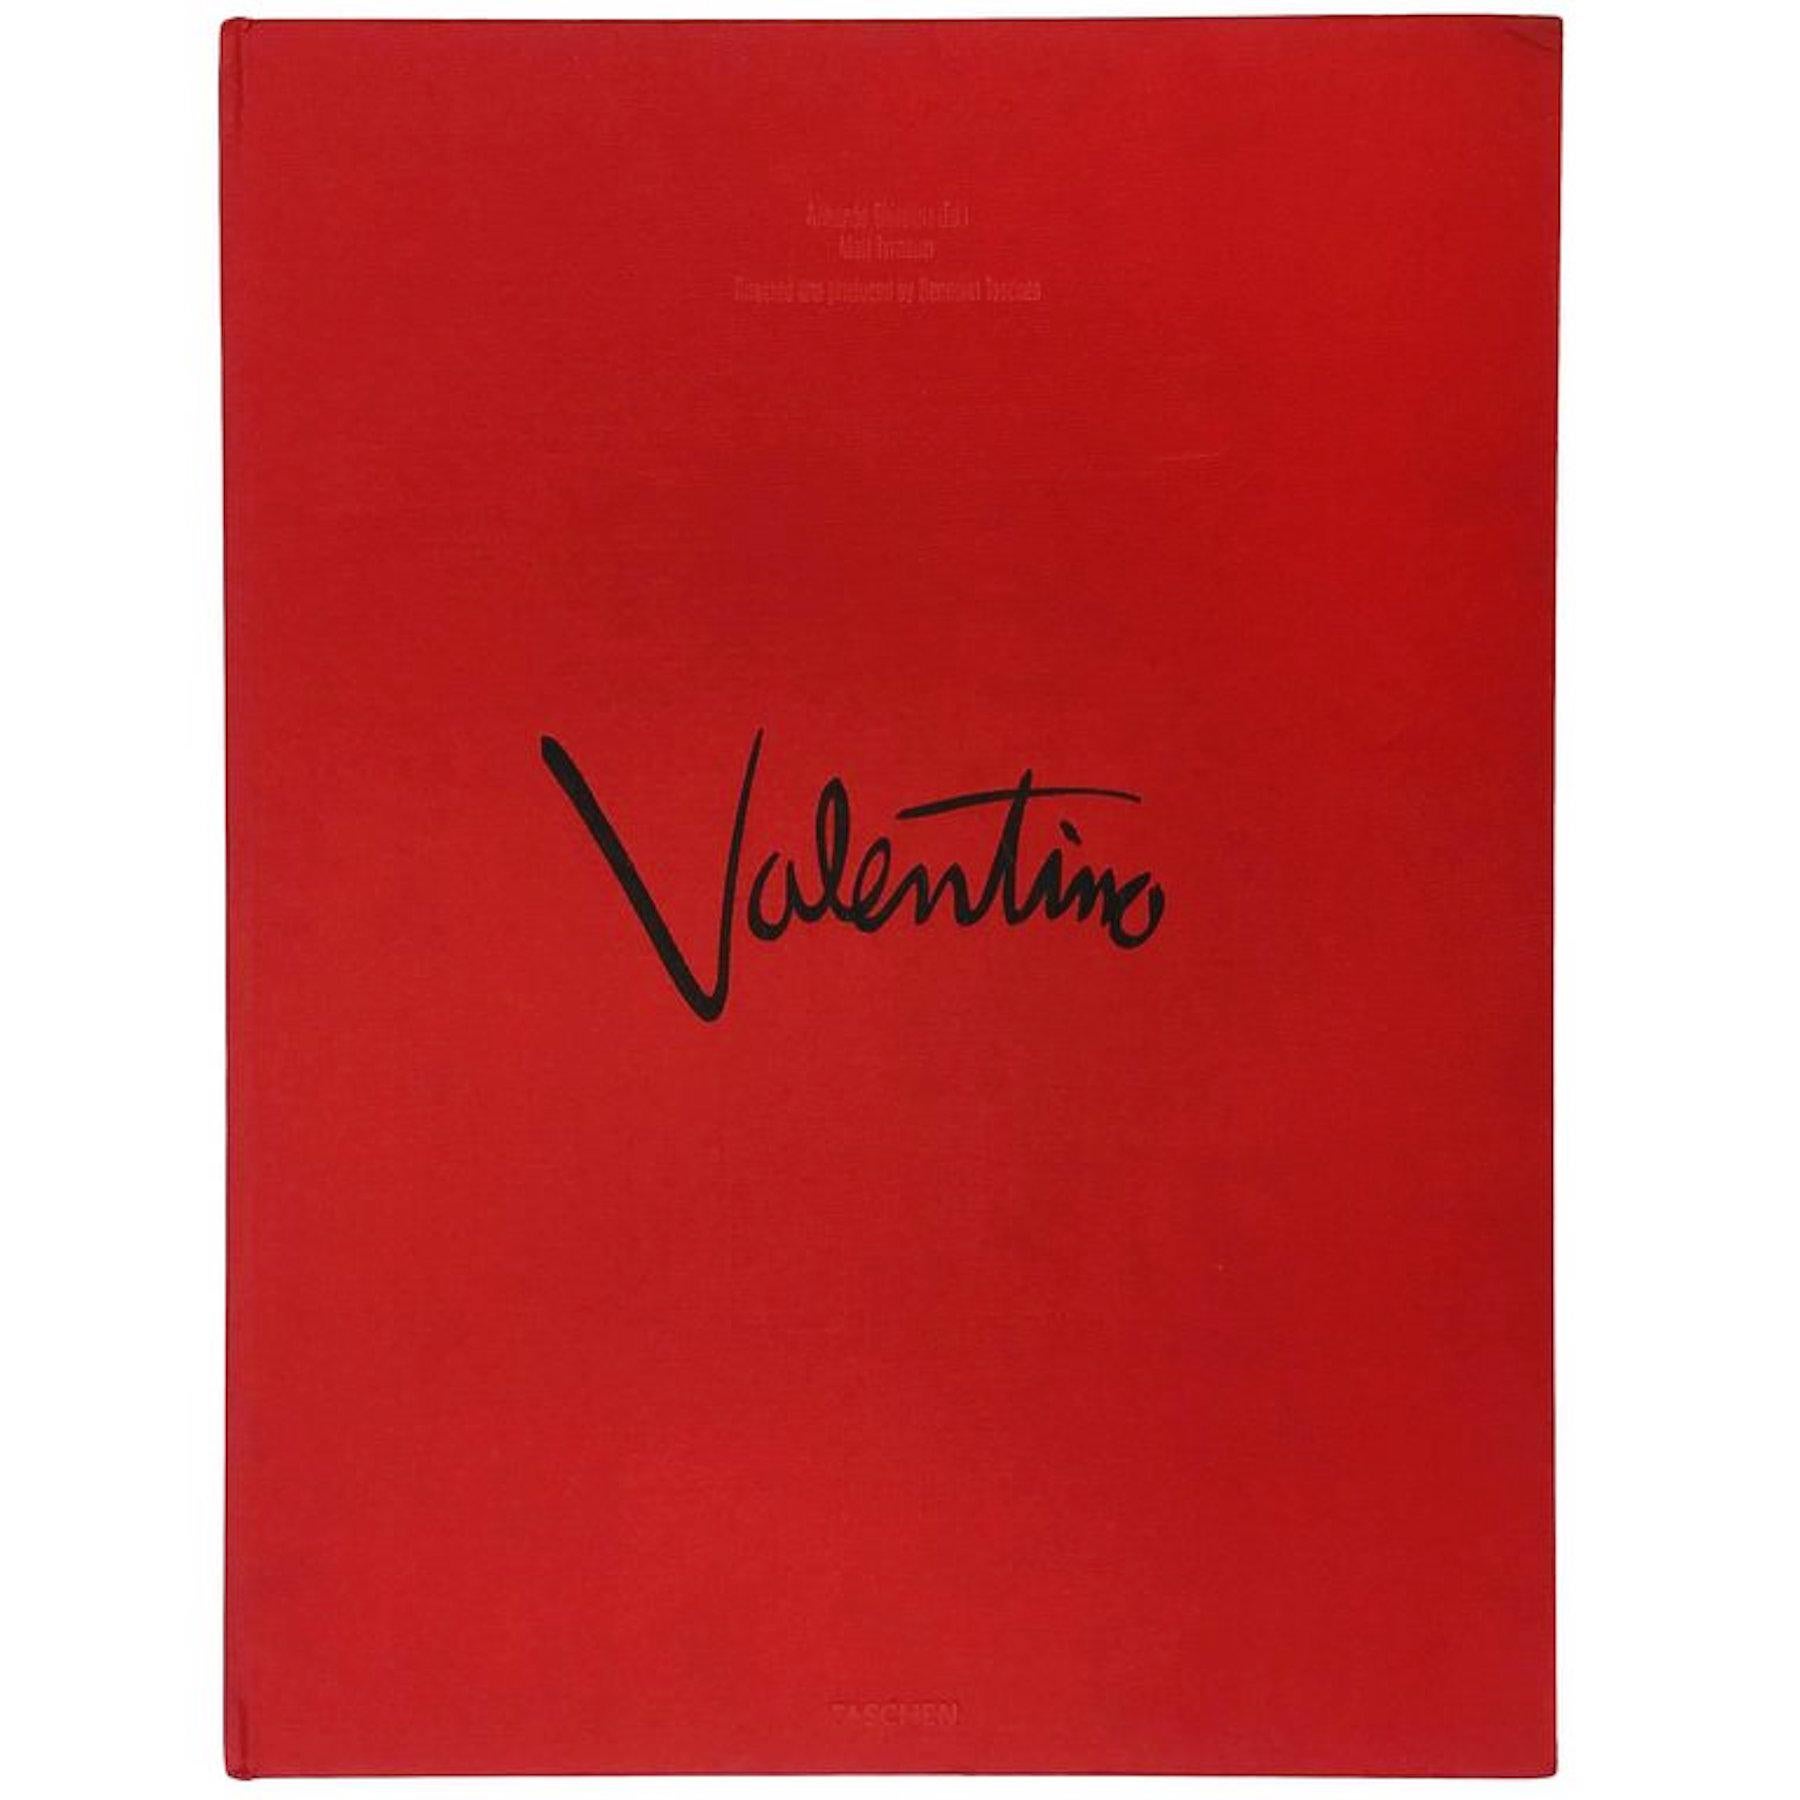 Valentino Garavani Una grande storia italiana #1593 of 2000, by Chitolina Armando. A fine example of Taschen's rare 783 page limited edition complete with the clamshell bookcover. Fresh from a Palm Beach Estate.


 